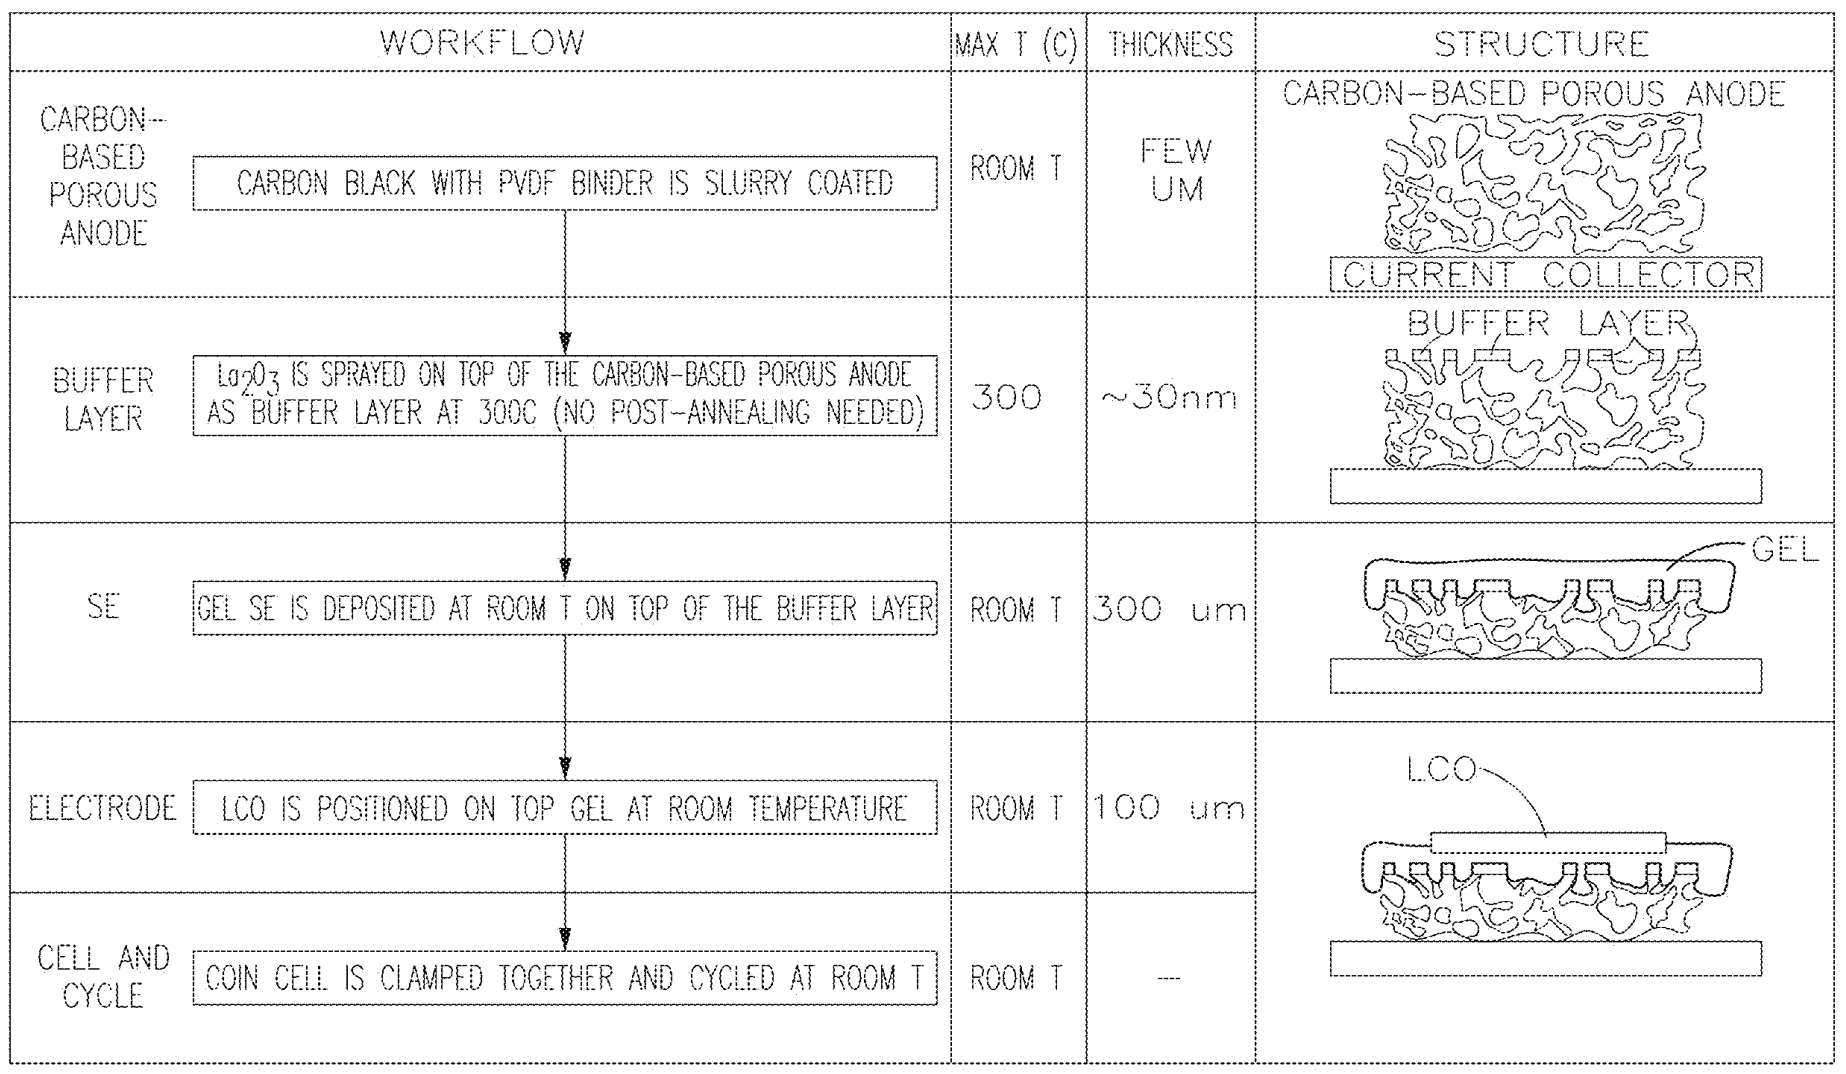 Patent Image 1, Samsung Electronics / MIT